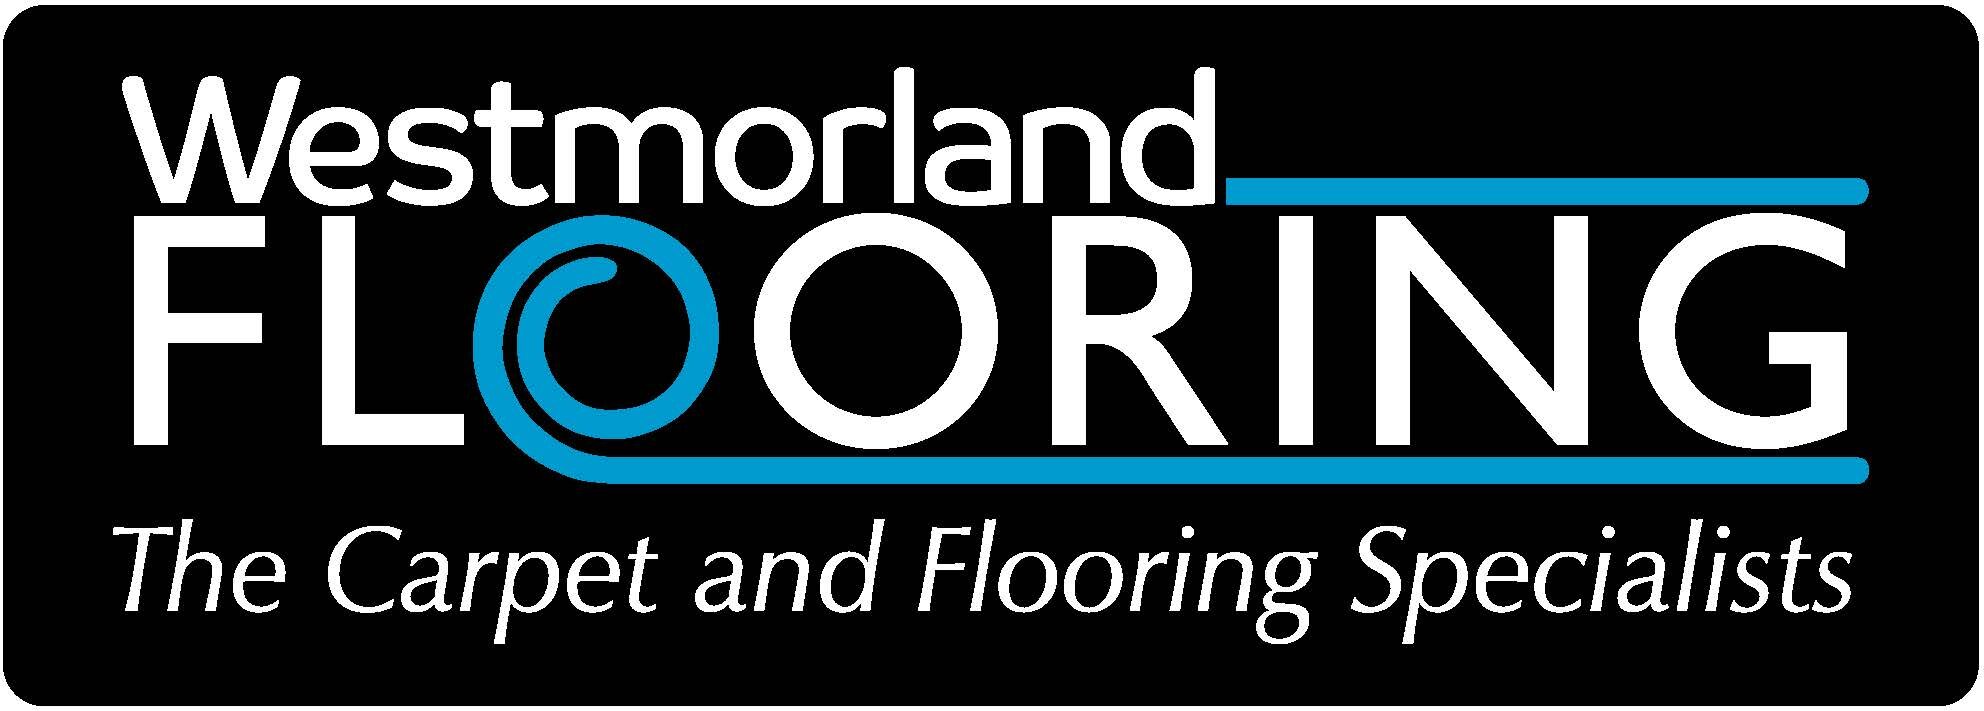 West Flooring logo.jpg